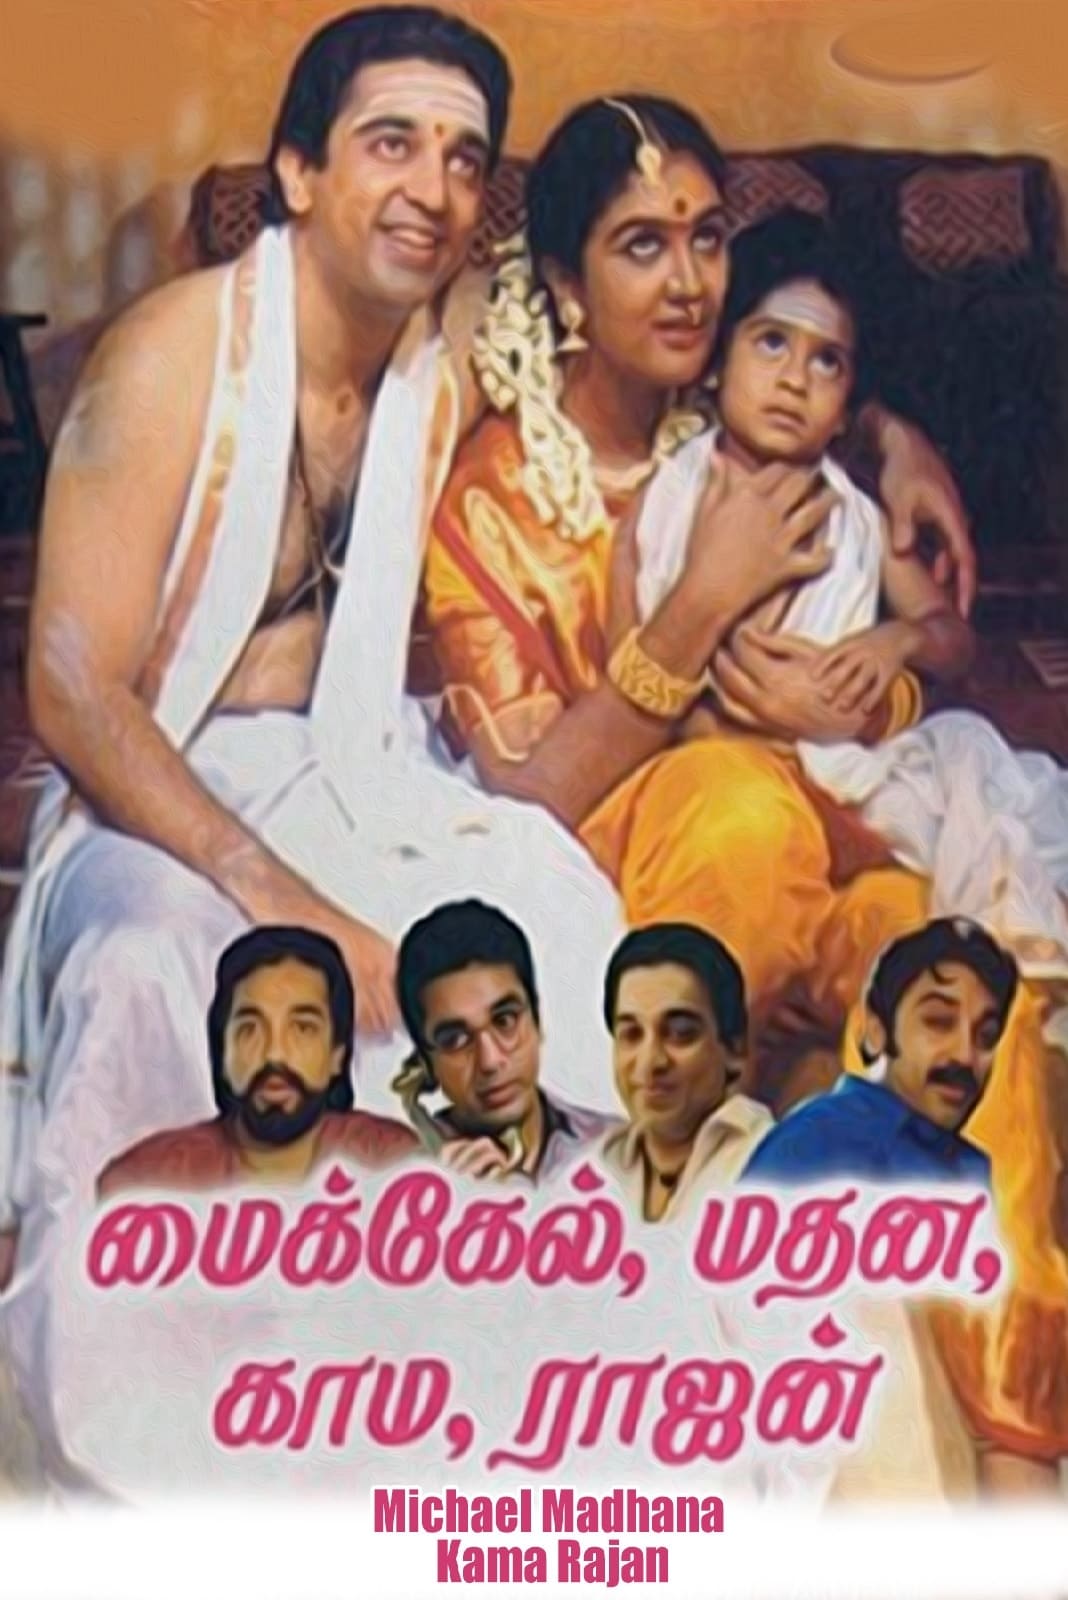 Poster for the movie "Michael Madana Kama Rajan"